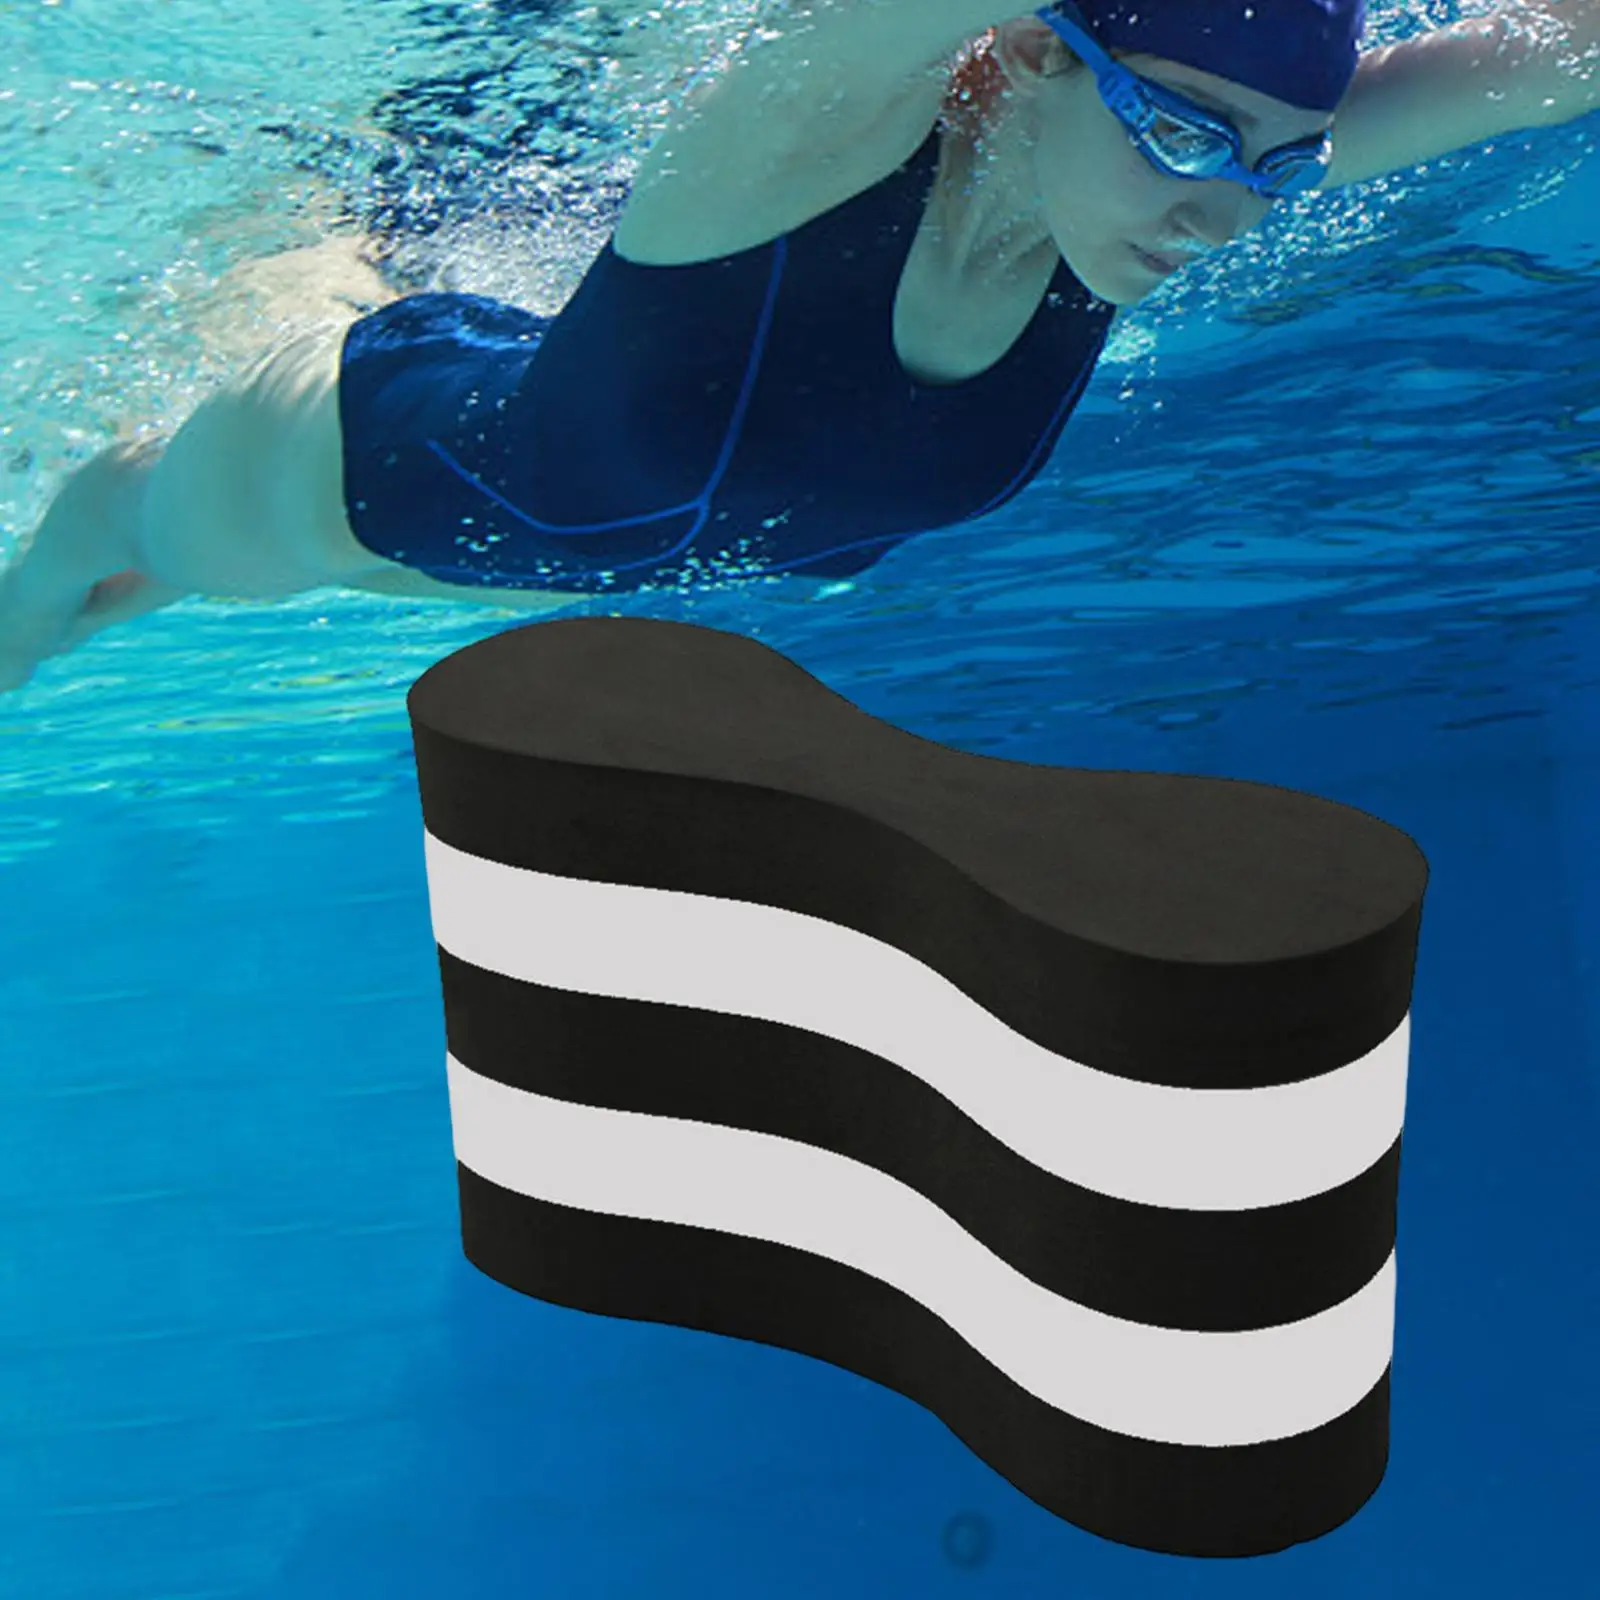 Pull Buoy Leg Float Swimming Float Pool Training Swimming Board Aquatic Fitness Strength Training Foam Pull Buoy for Kids